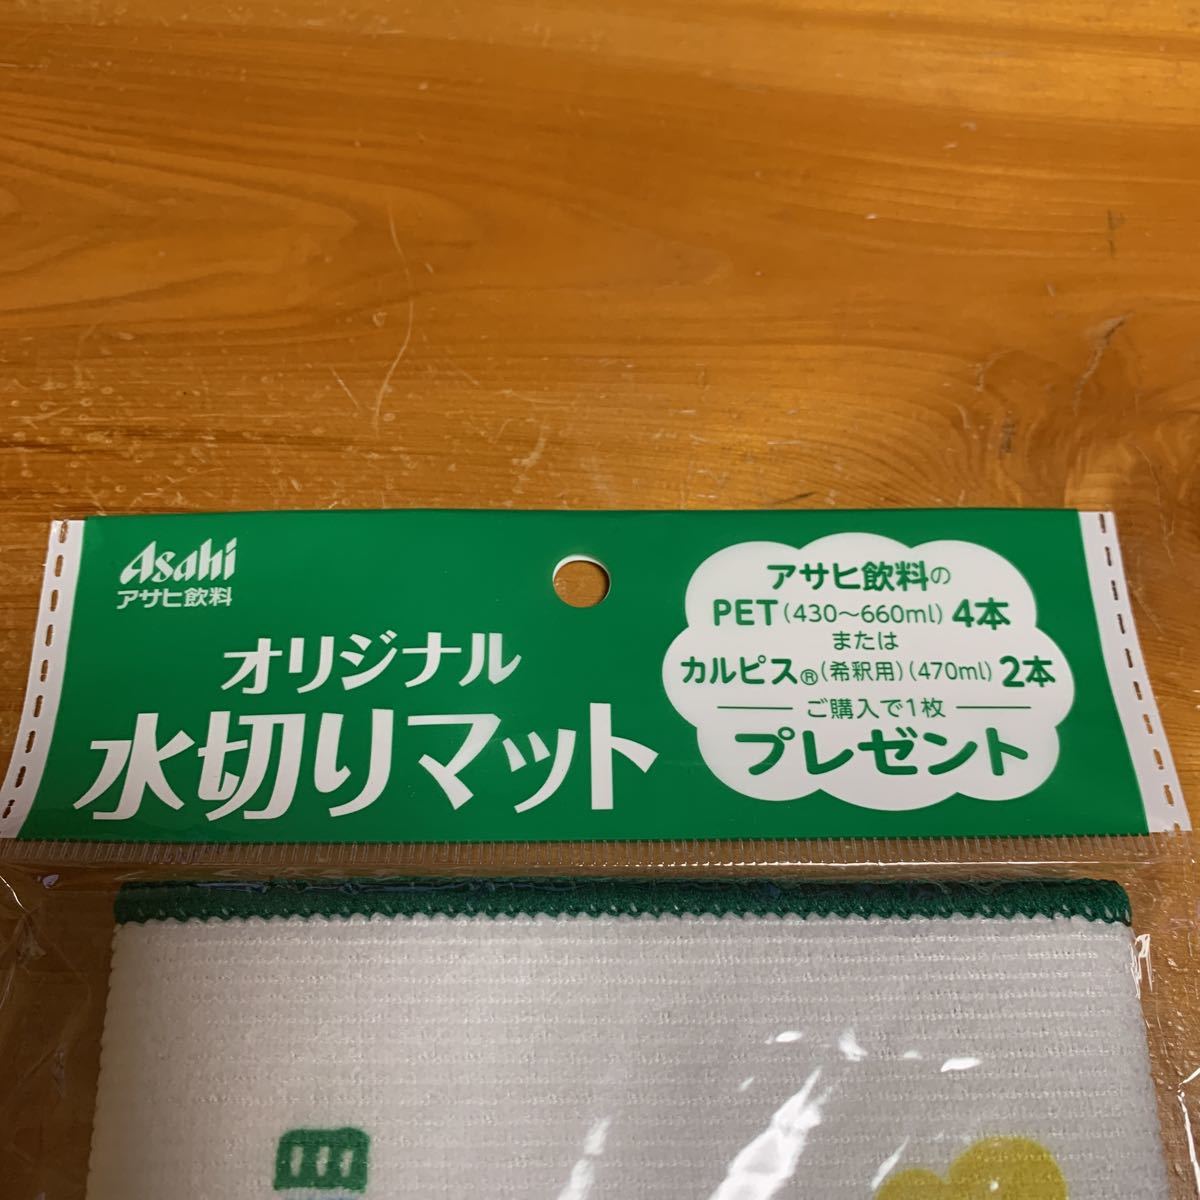 Asahi カルピスオリジナル 水切りマット アサヒ飲料 ノベリティ 非売品 新品 未開封品 送料無料_画像3